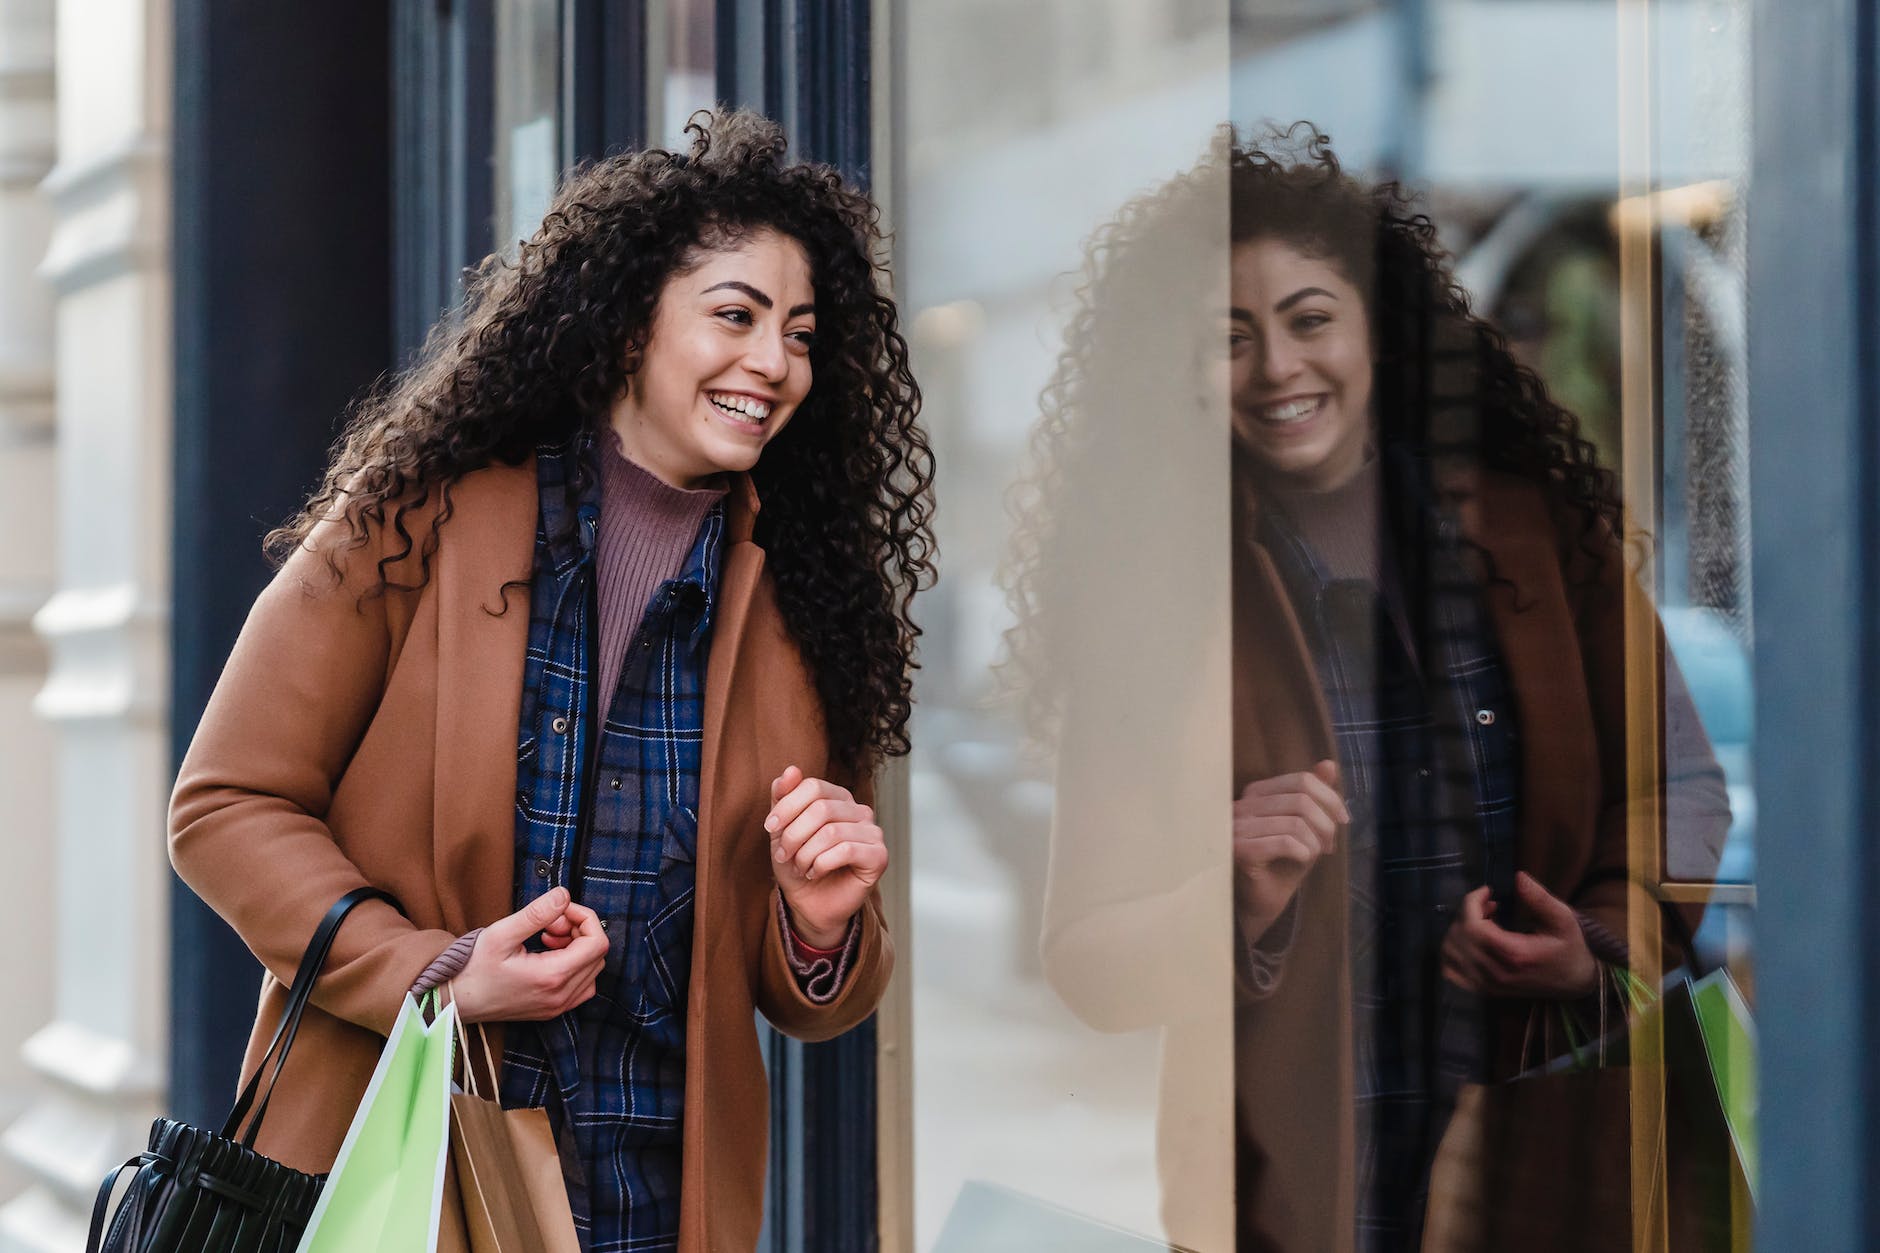 joyful ethnic woman with shopping bags standing near glass building